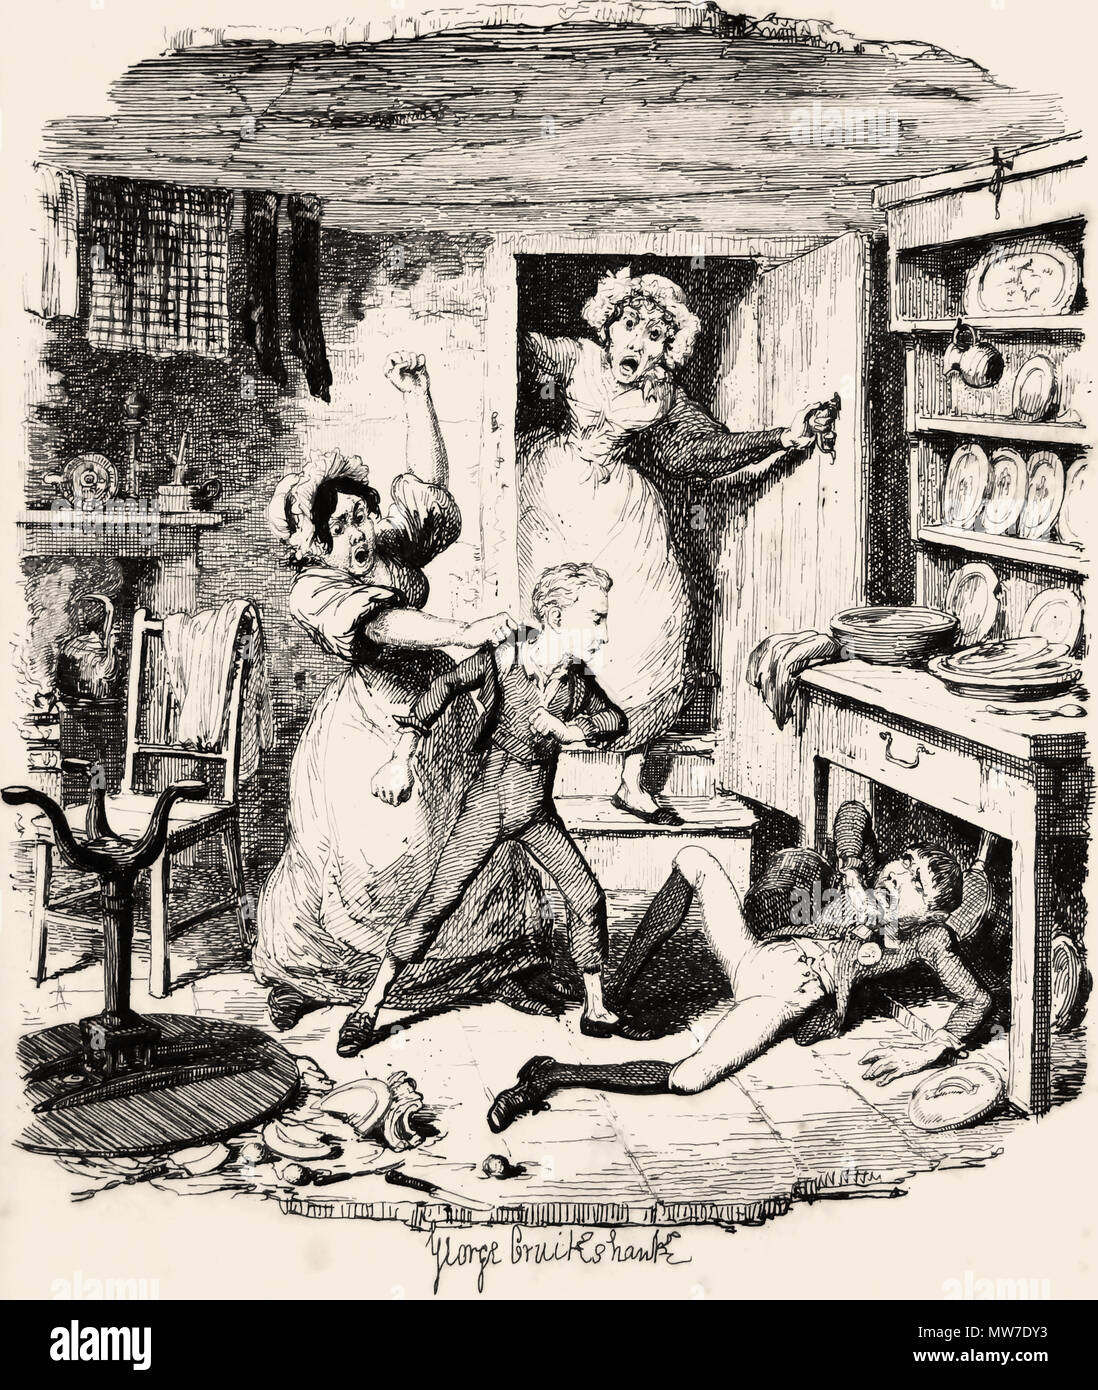 George Cruikshank - Inglese Illustrator - "Oliver spenna fino a spirito."  Dalle "Oliver Twist" da Boz (Charles Dickens). Vol. 1. Londra: Richard  Bentley, 1838. Prima edizione Foto stock - Alamy